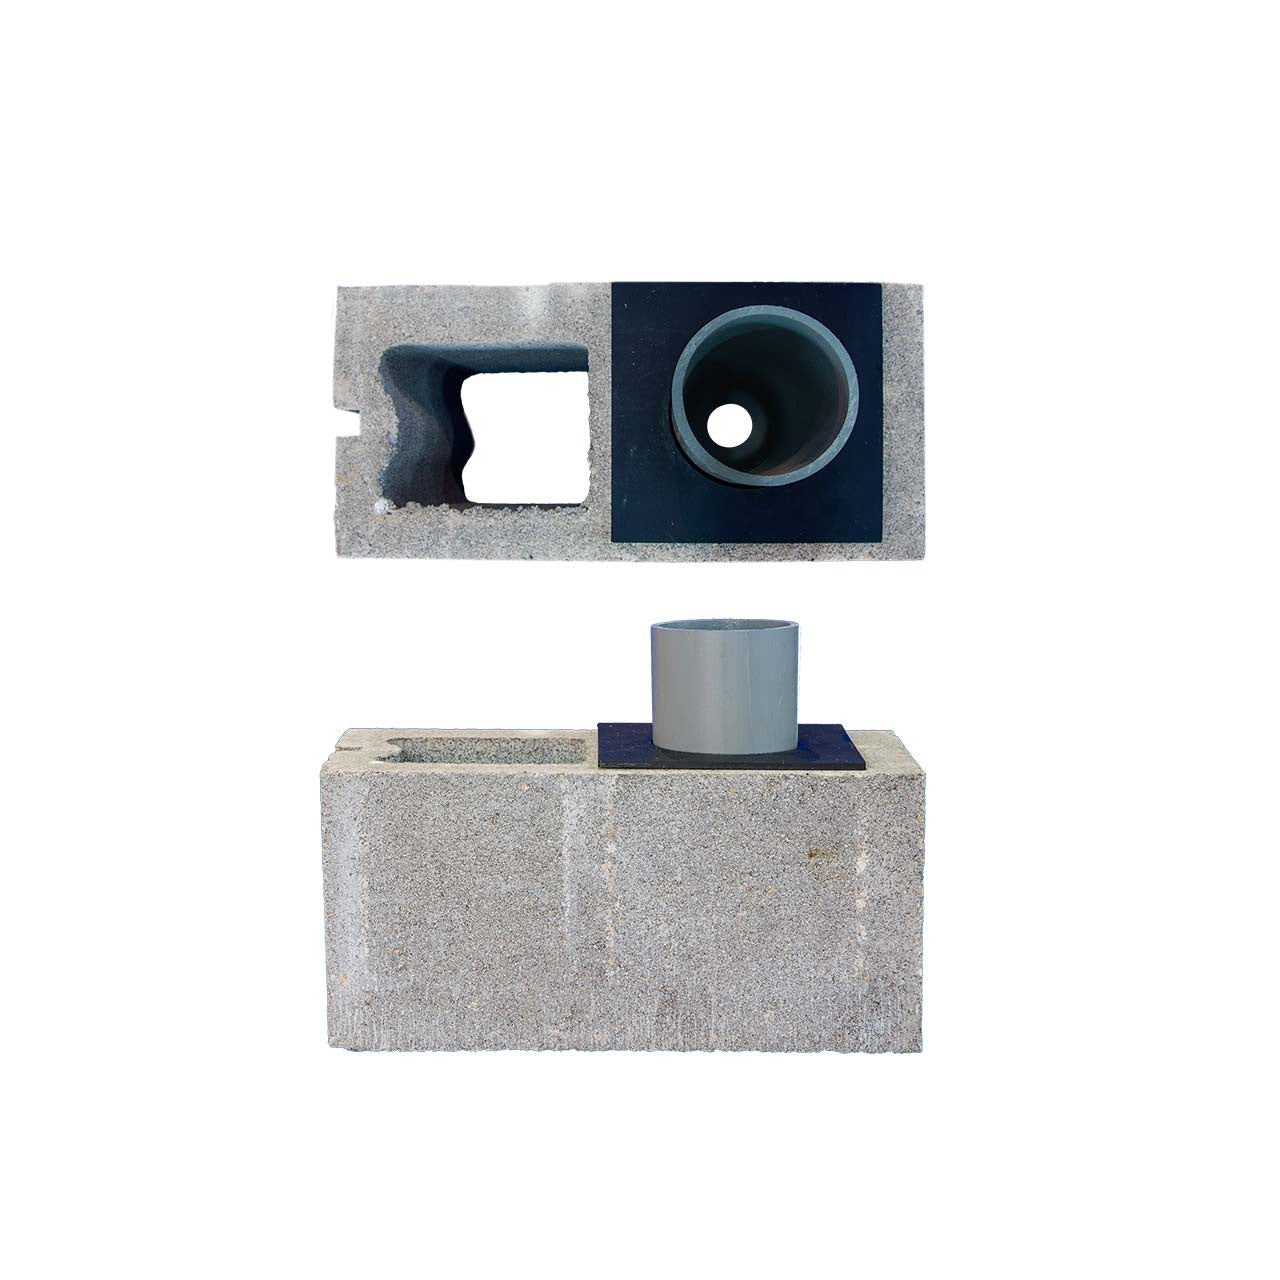 Concrete Block Adapter